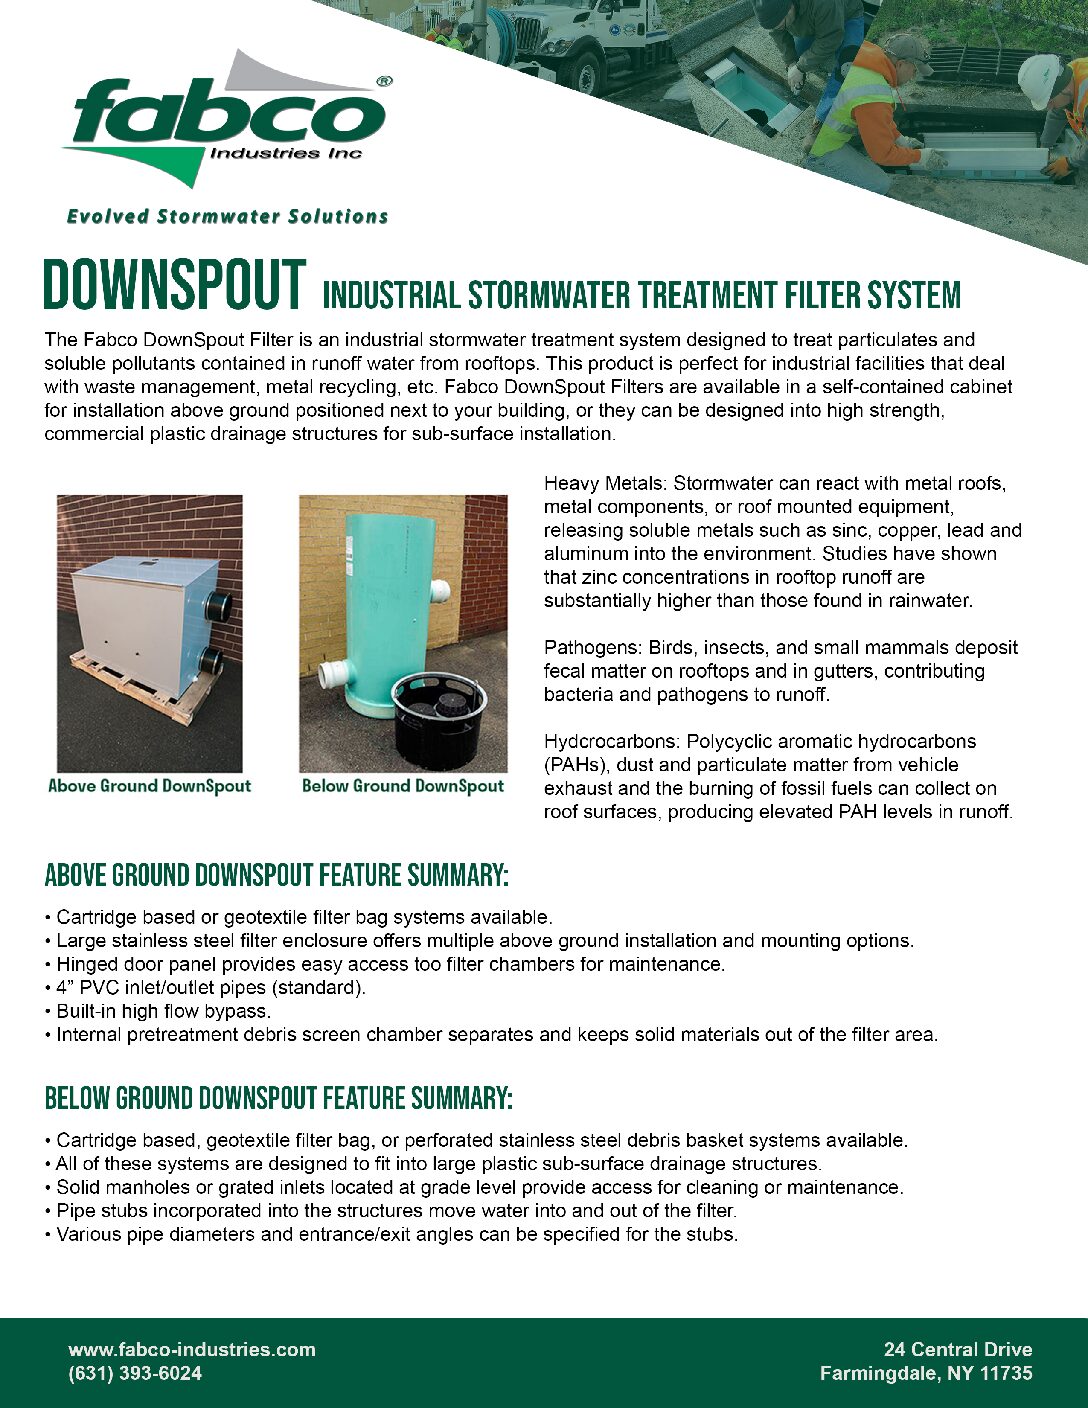 DownSpout Brochure 1 pdf